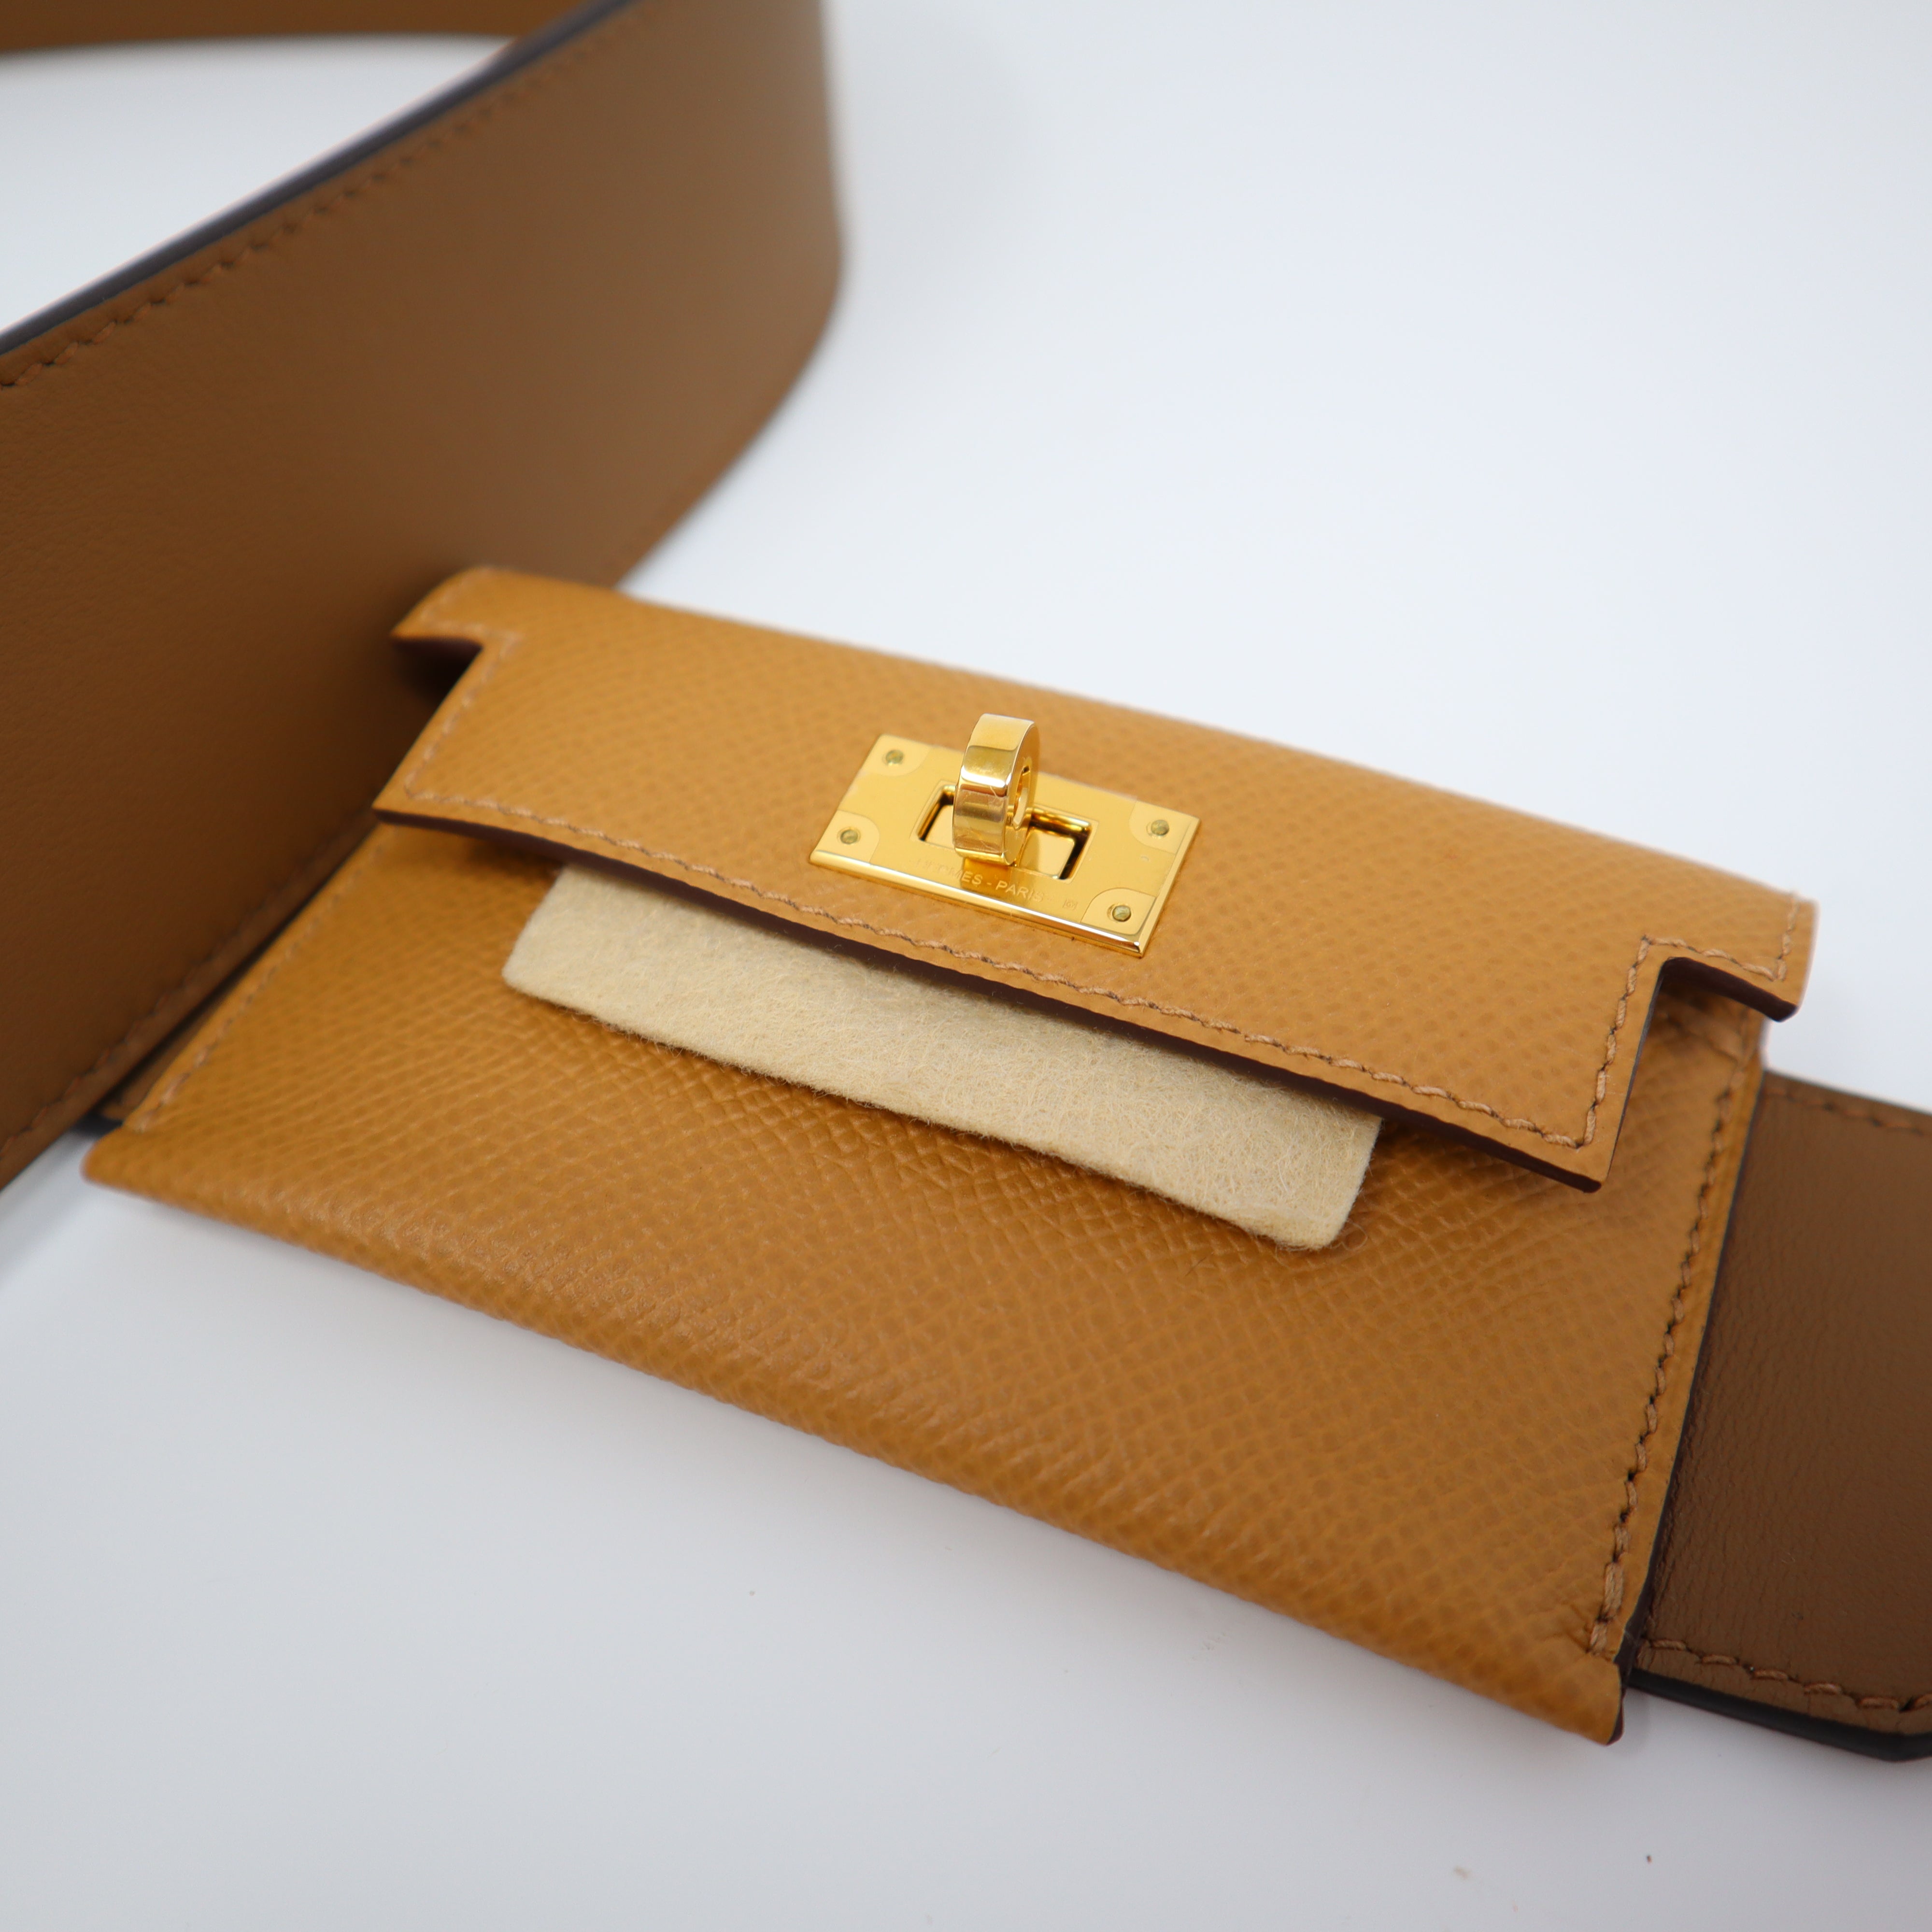 Hermès 2020 Swift & Epsom Kelly Pocket 50mm Bag Strap One Size